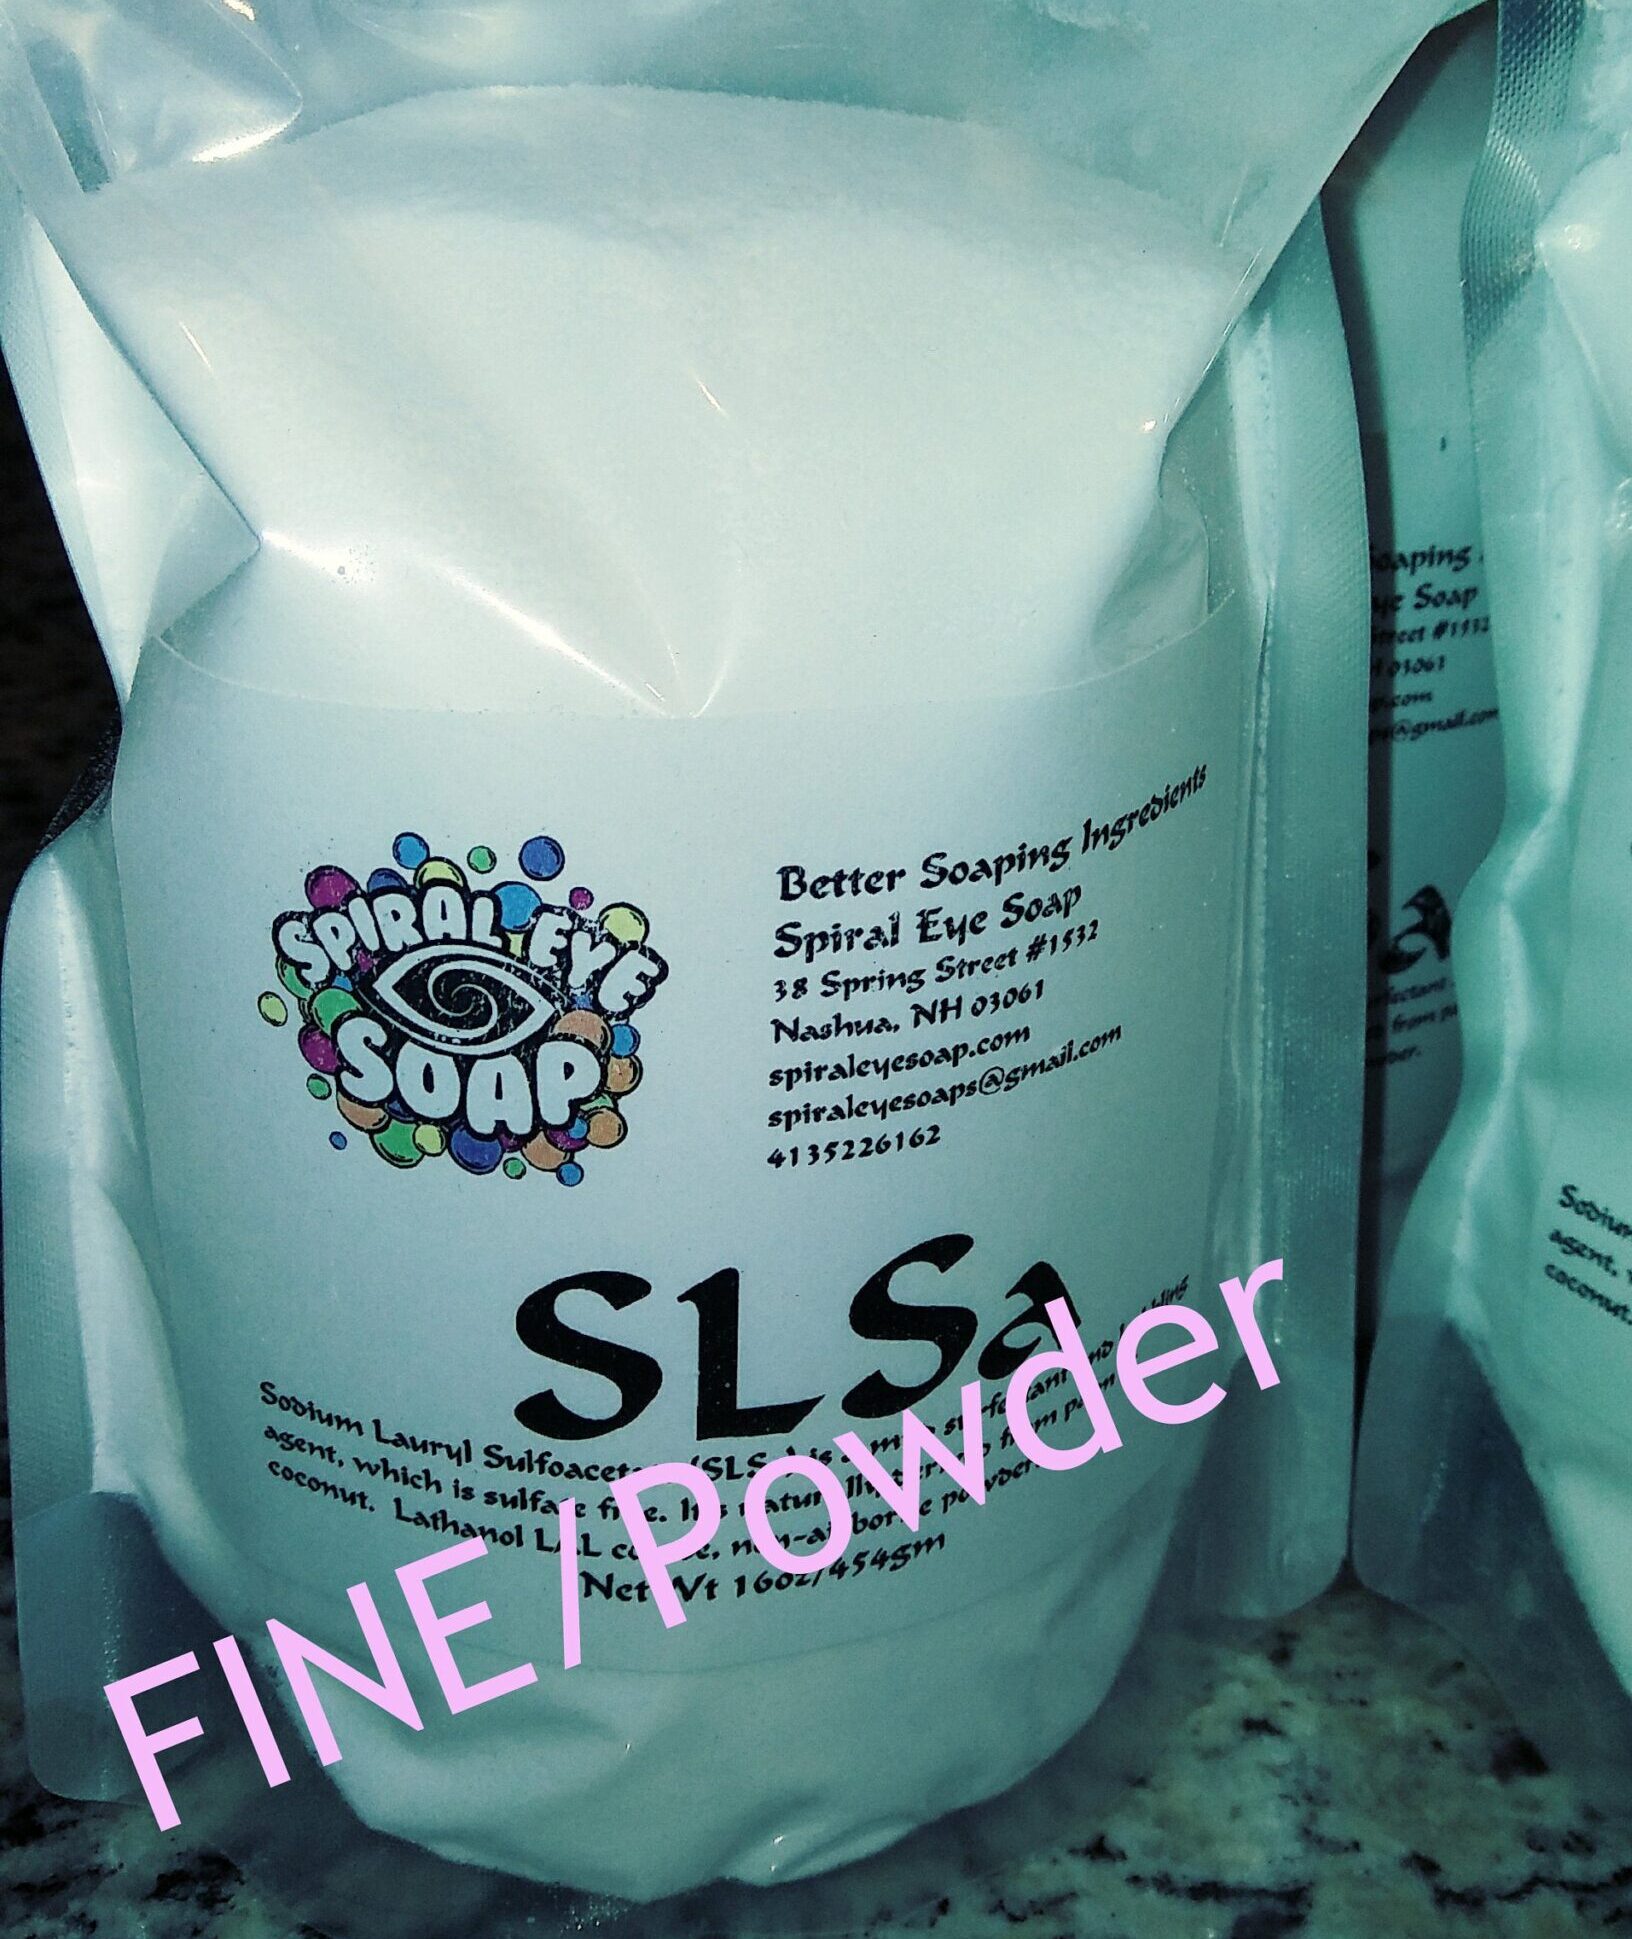 1.7 Pound Slsa Powder for Making Bath Bombs, Premium Slsa Sodium Lauryl Sulfoacetate Powder, Amazing Bubbles, Gentle on Skin, Suitable for Making